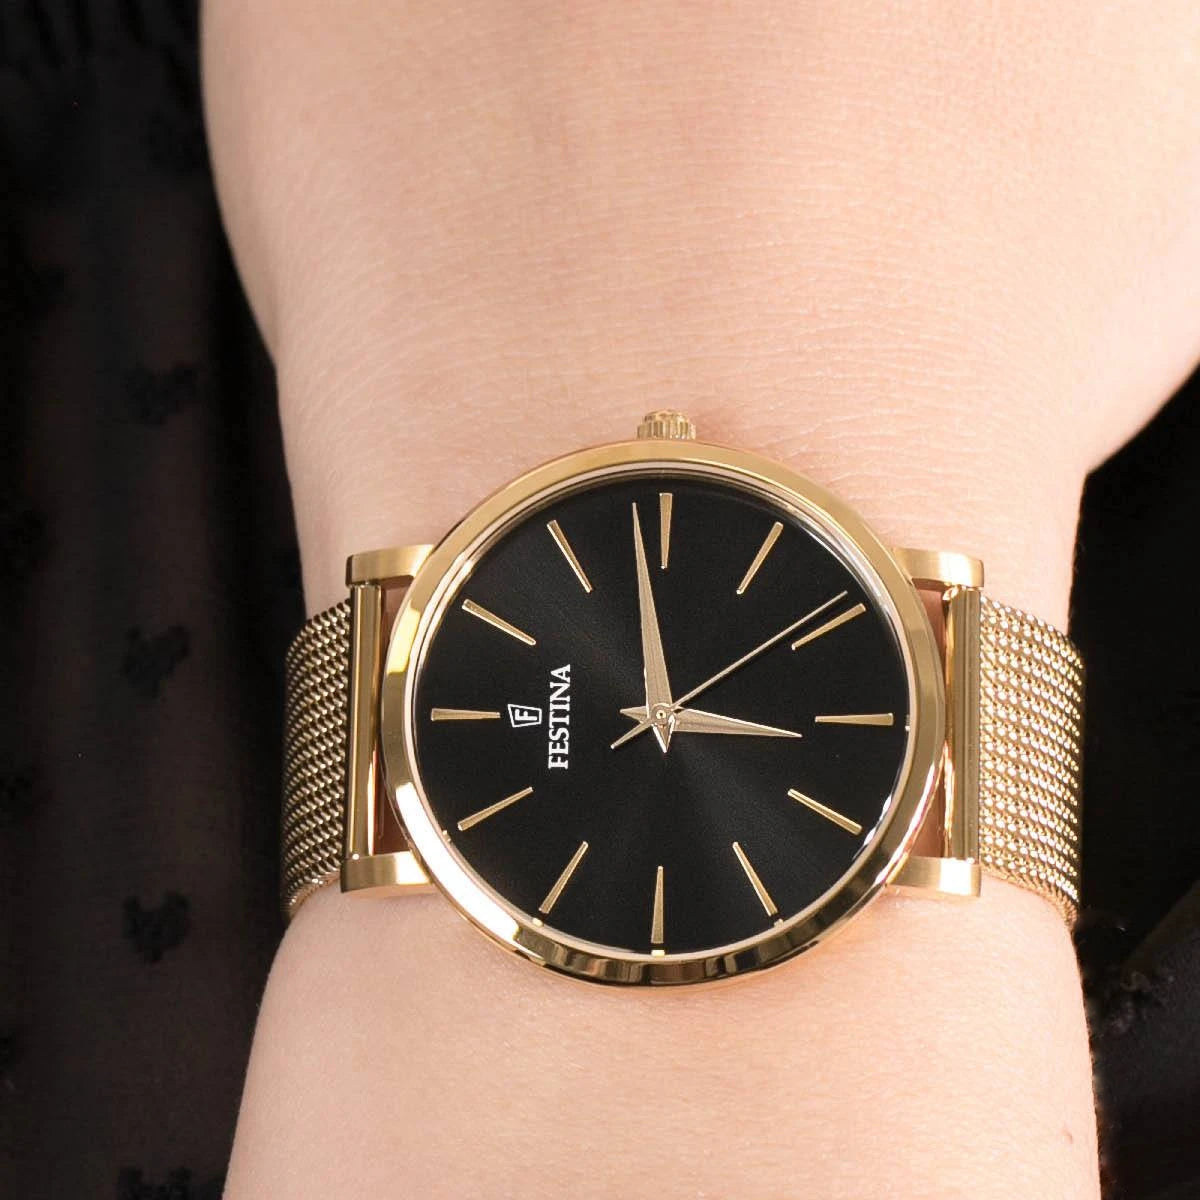 Women's watch, quartz movement, black dial - f20476/2